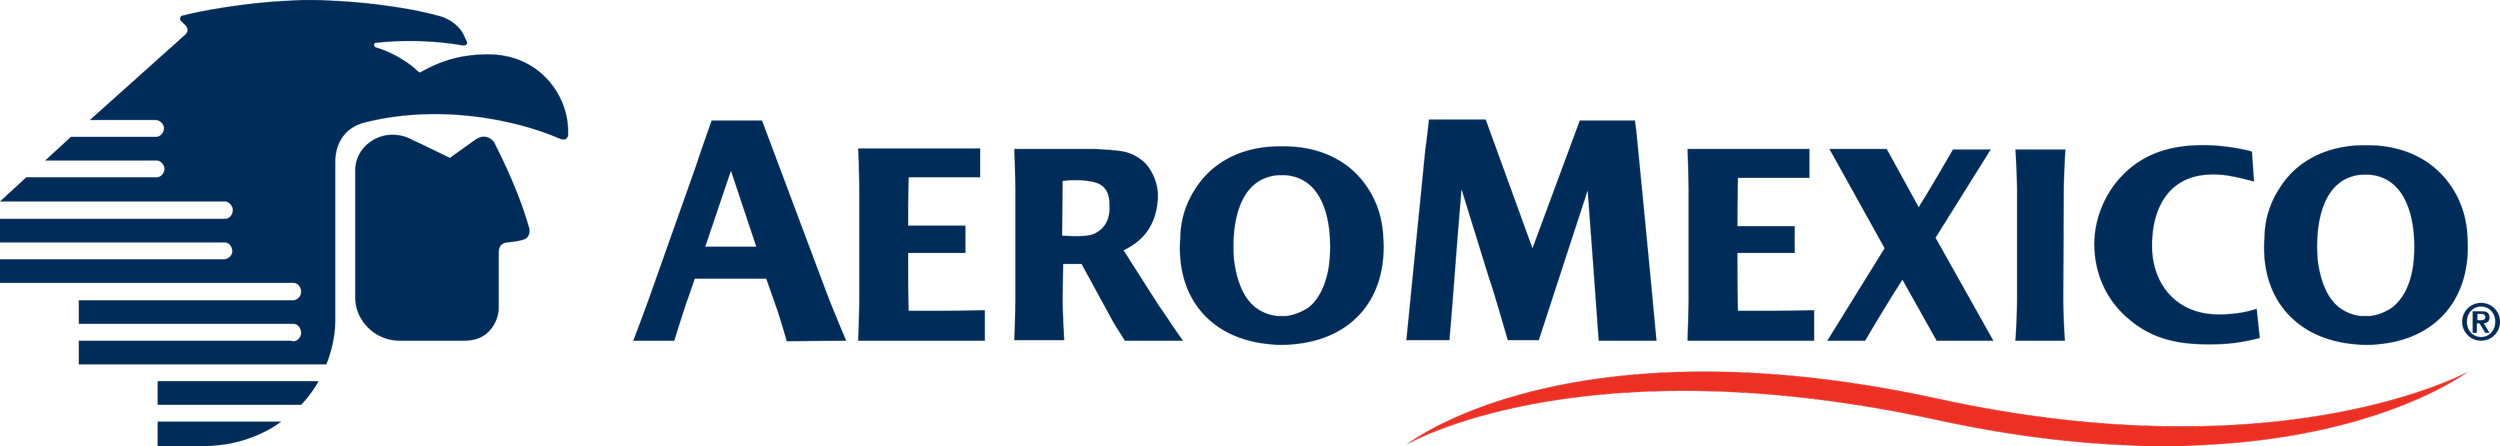 aeromexico-logo.png